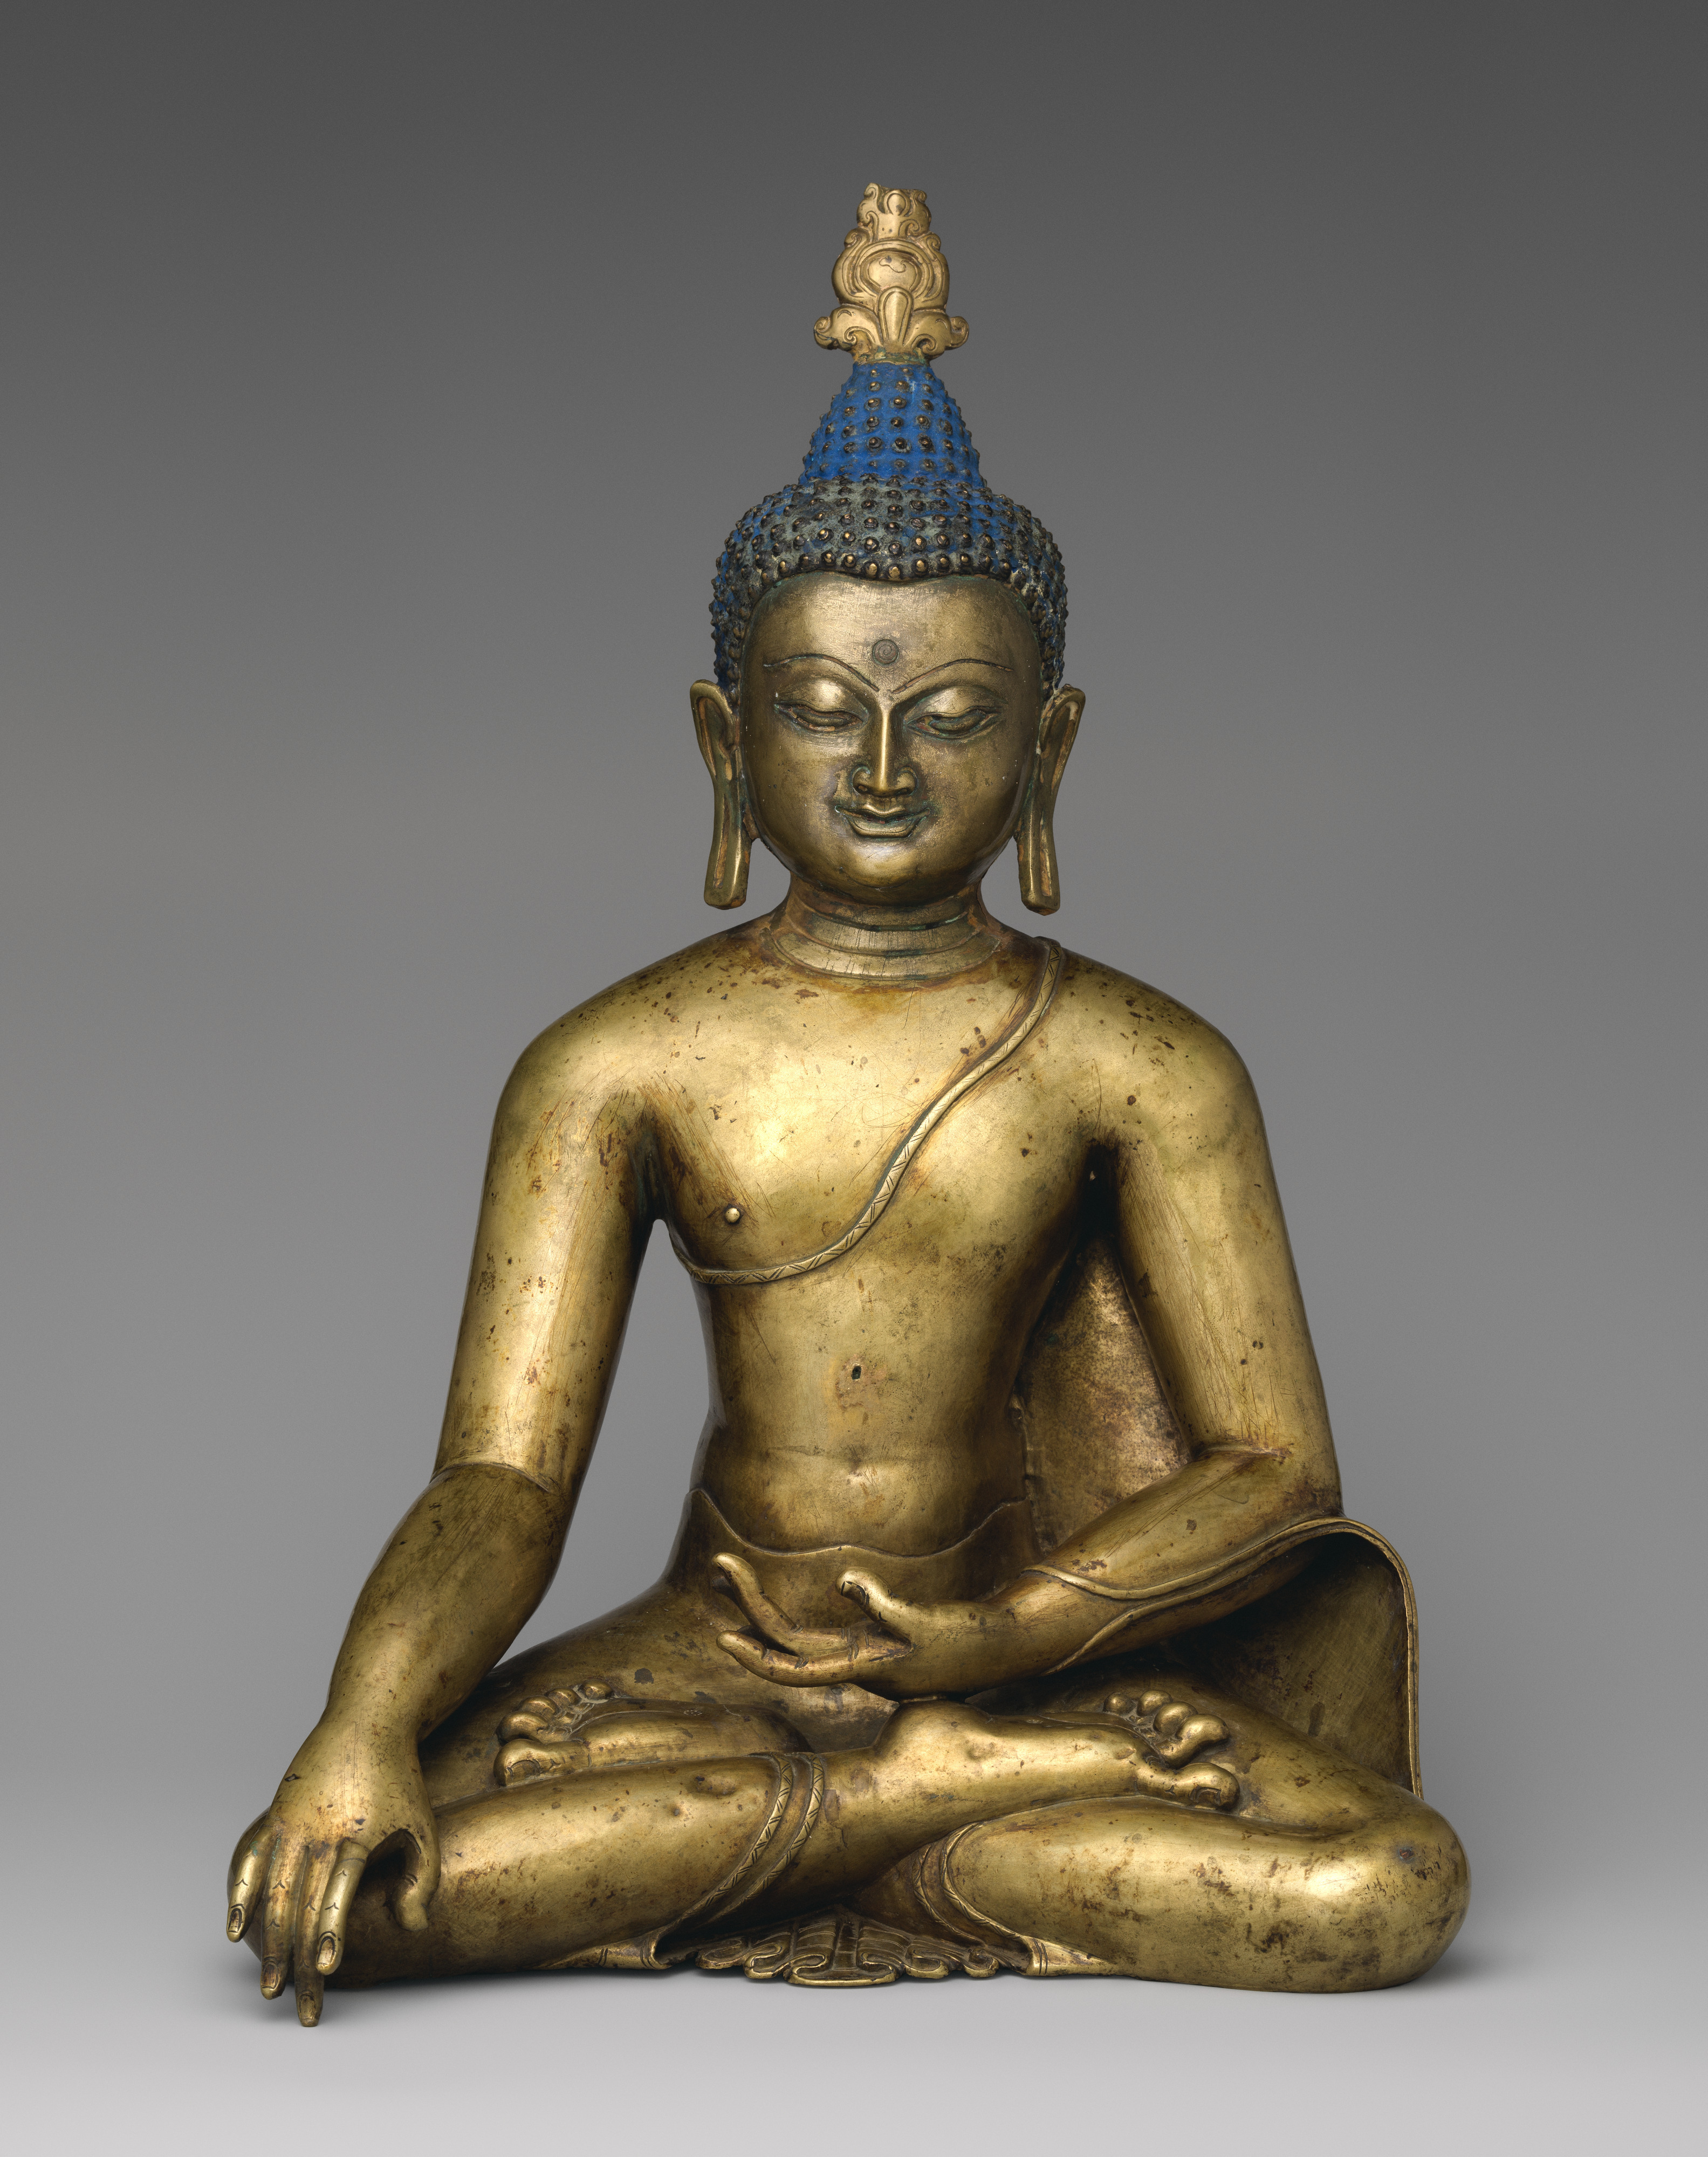 Buddha Shakyamuni by Unknown Artist - 12th century - 39.4 x 26.5 x 21.9 cm Metropolitan Museum of Art